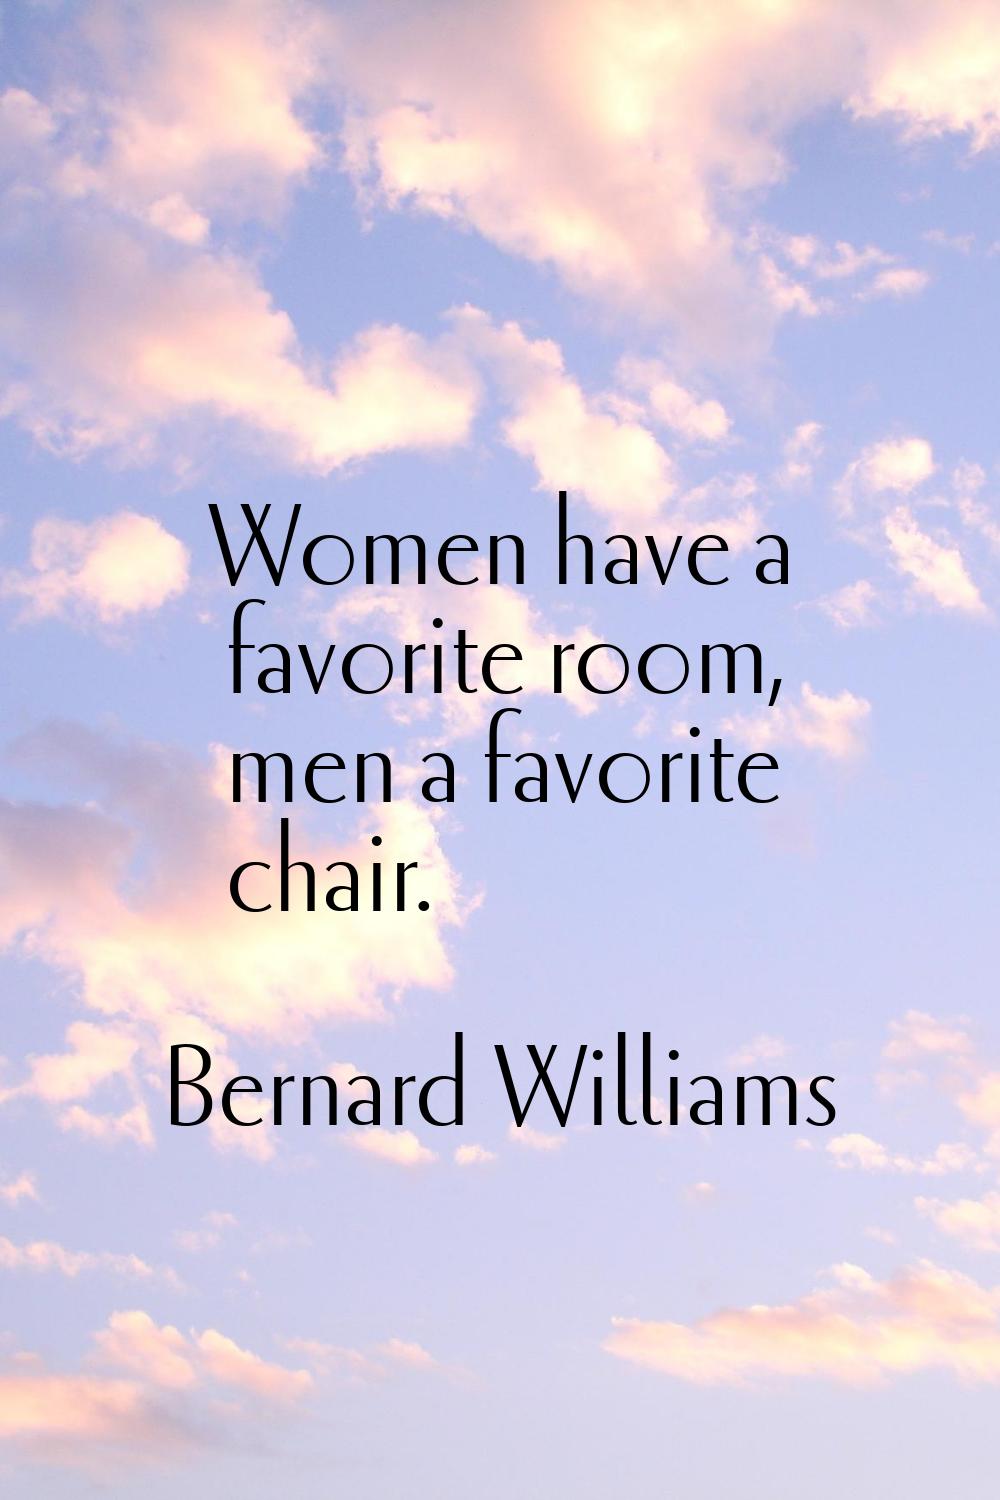 Women have a favorite room, men a favorite chair.